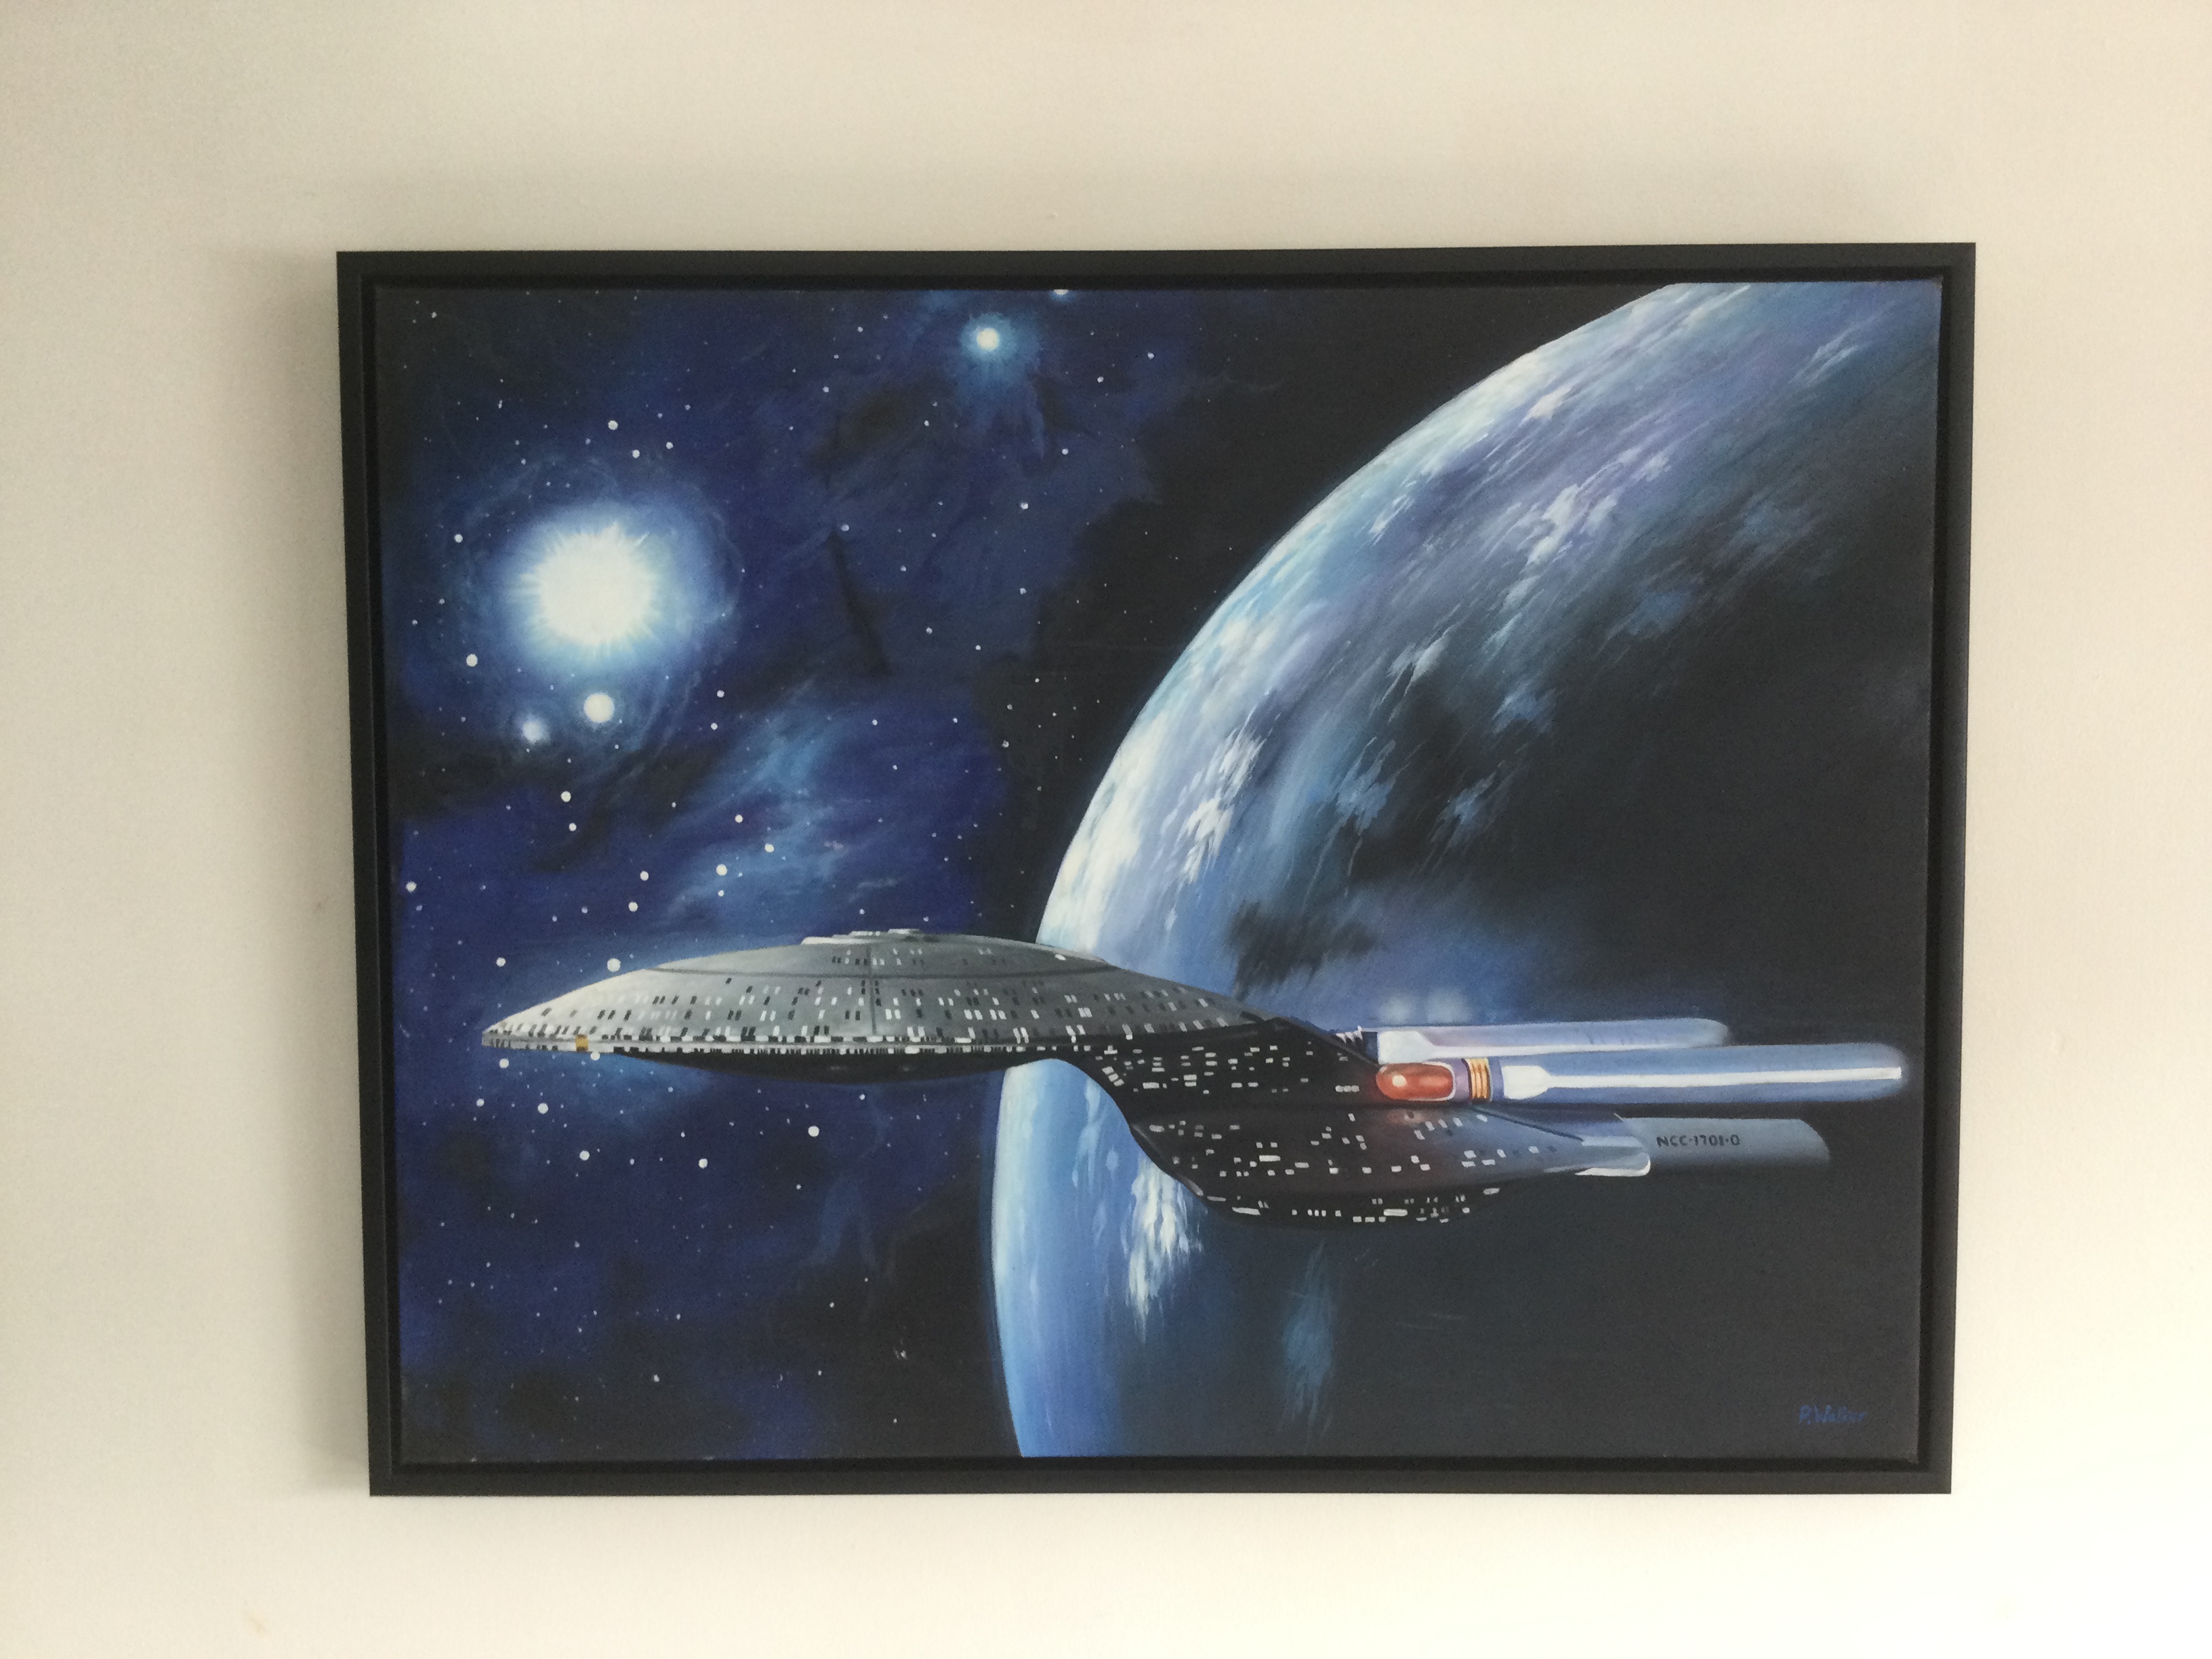 “The Starship Enterprise” by P. Walker